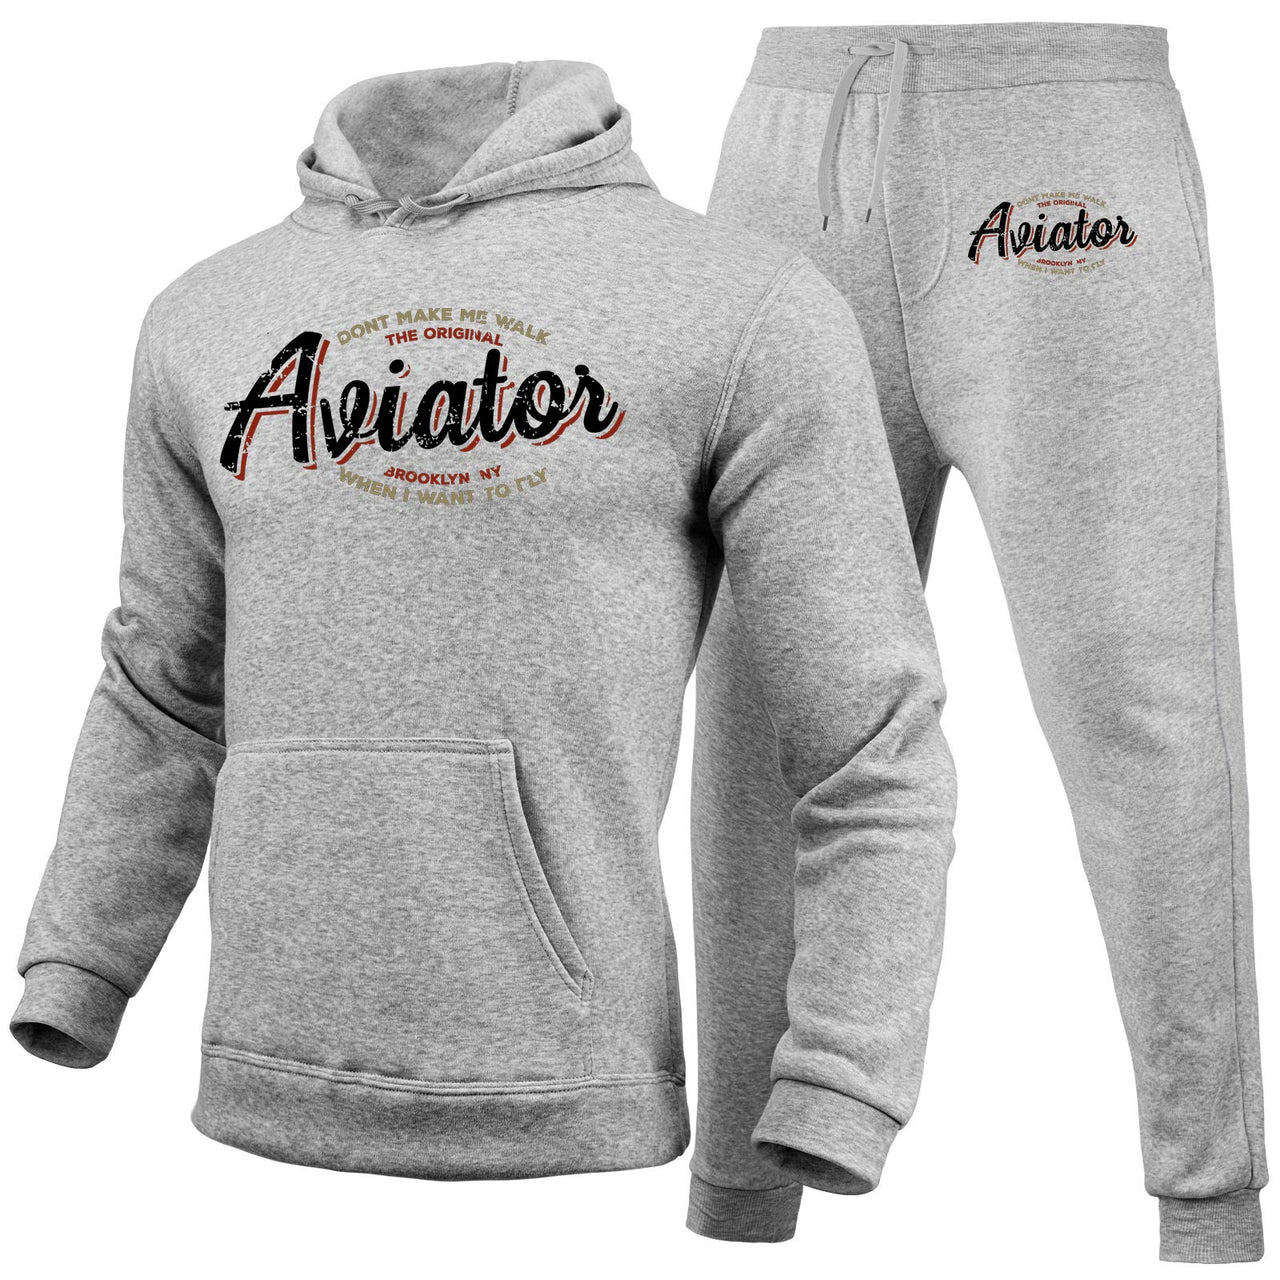 Aviator - Dont Make Me Walk Designed Hoodies & Sweatpants Set